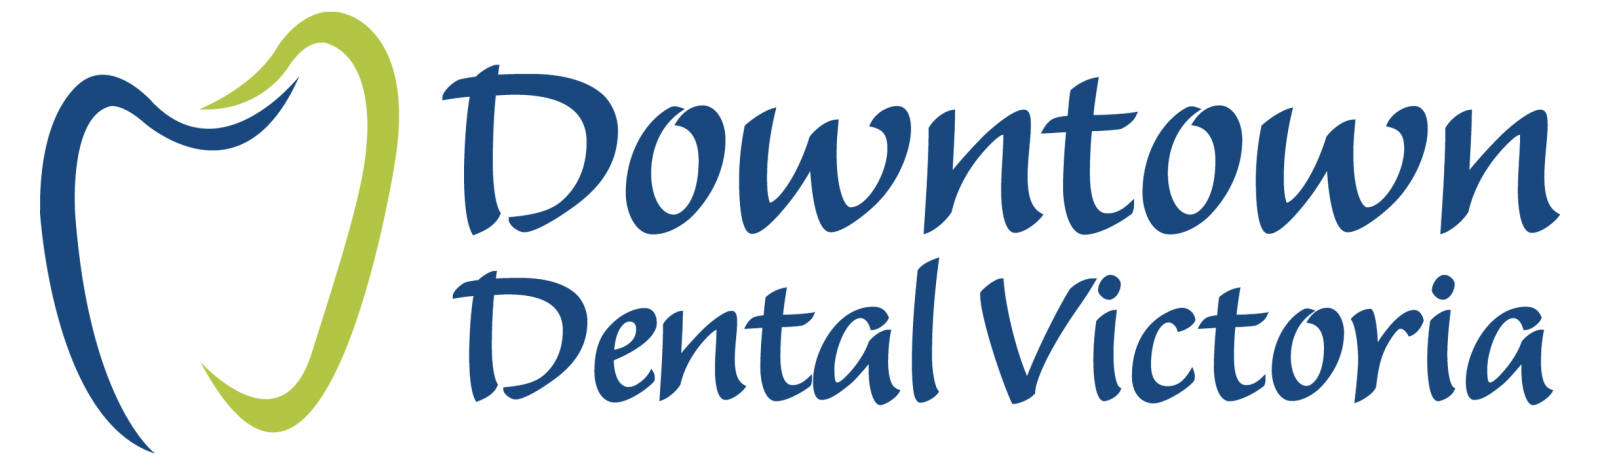 Dentures in Victoria | Victoria BC Downtown Dental Office